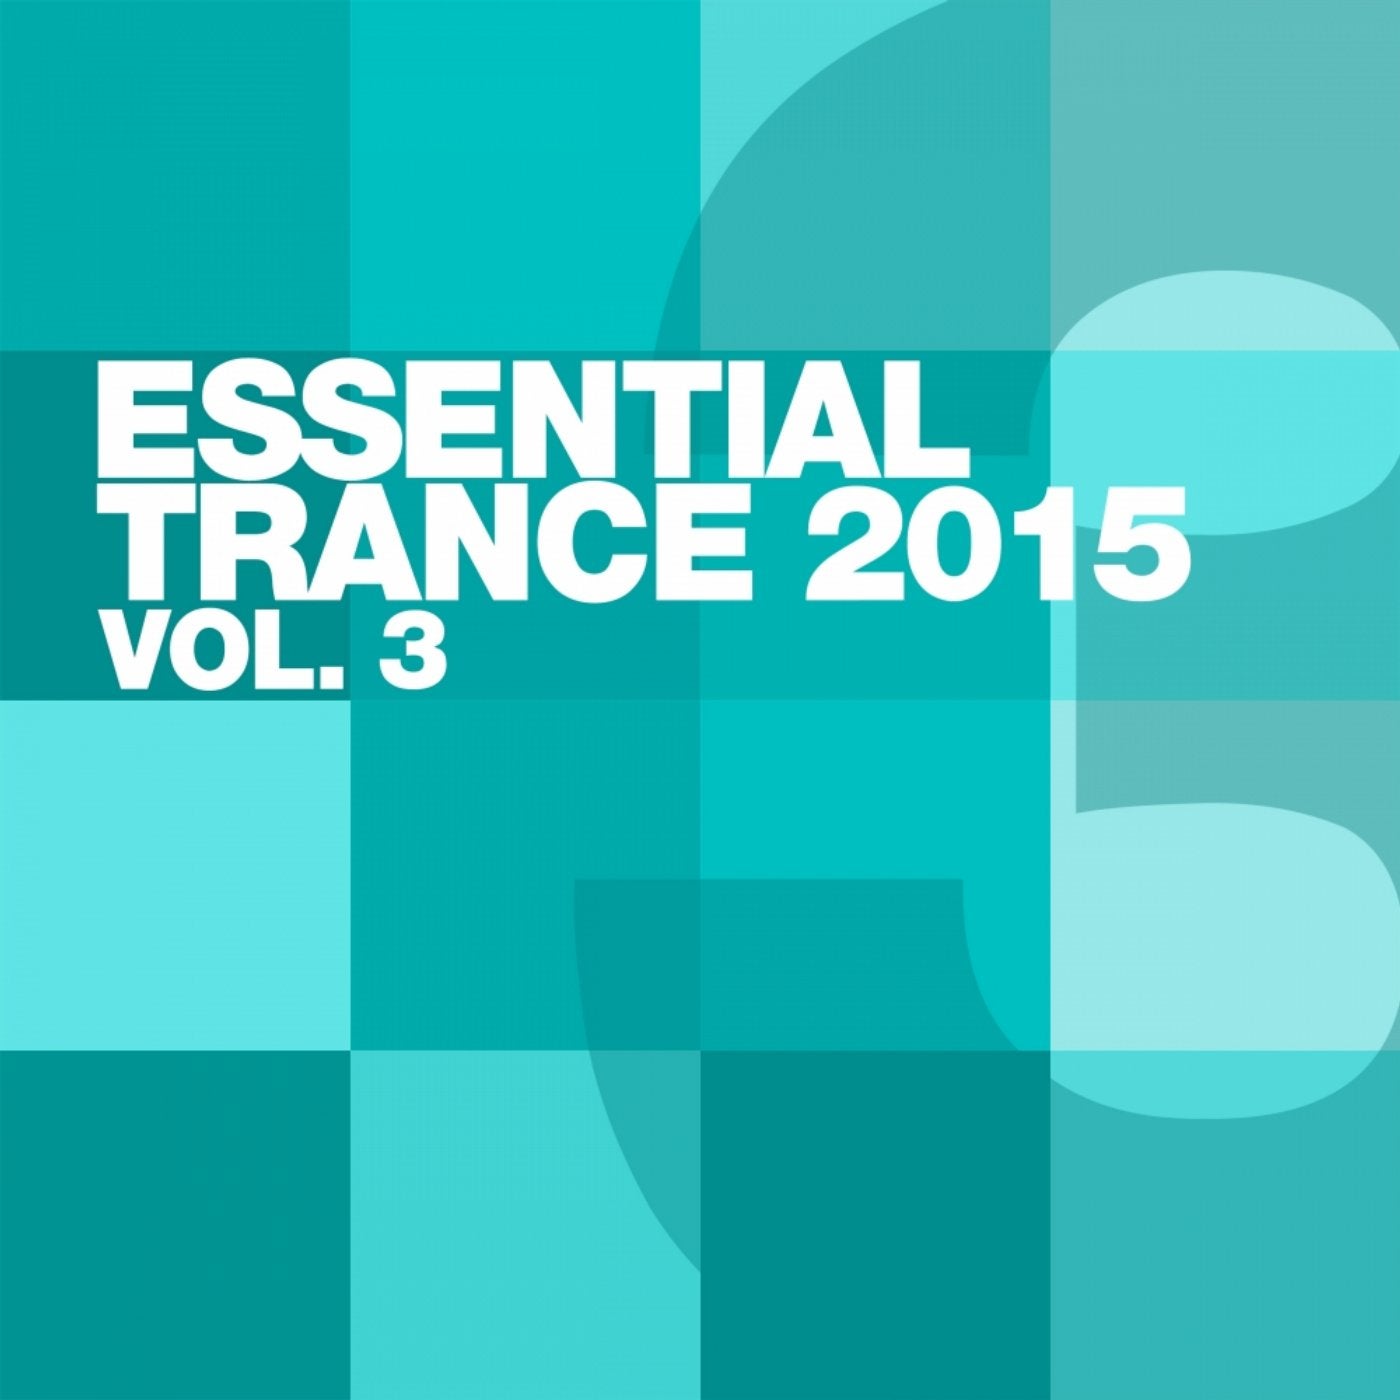 Essential Trance 2015, Vol. 3